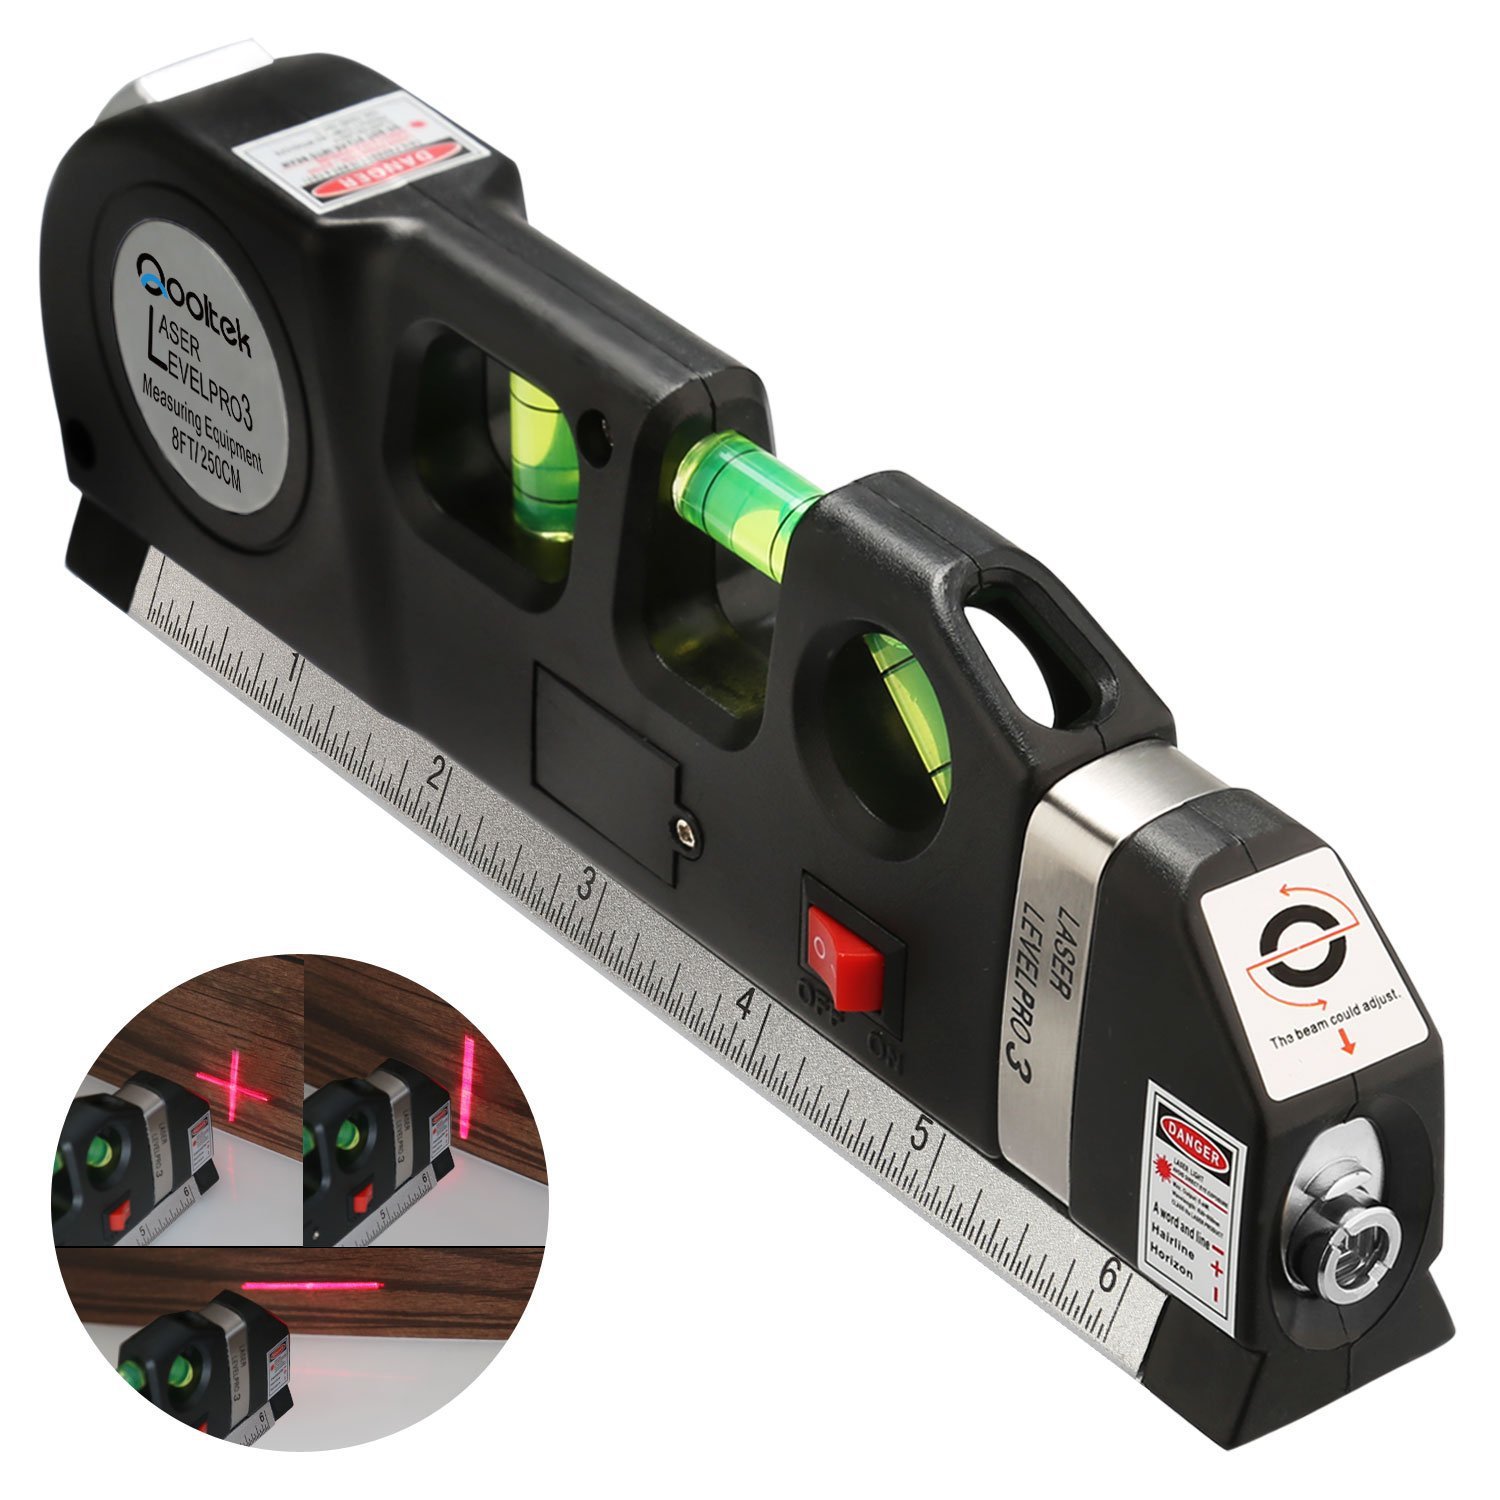 Laser level guide leveler straight project line spirit level tool hang pictu RF